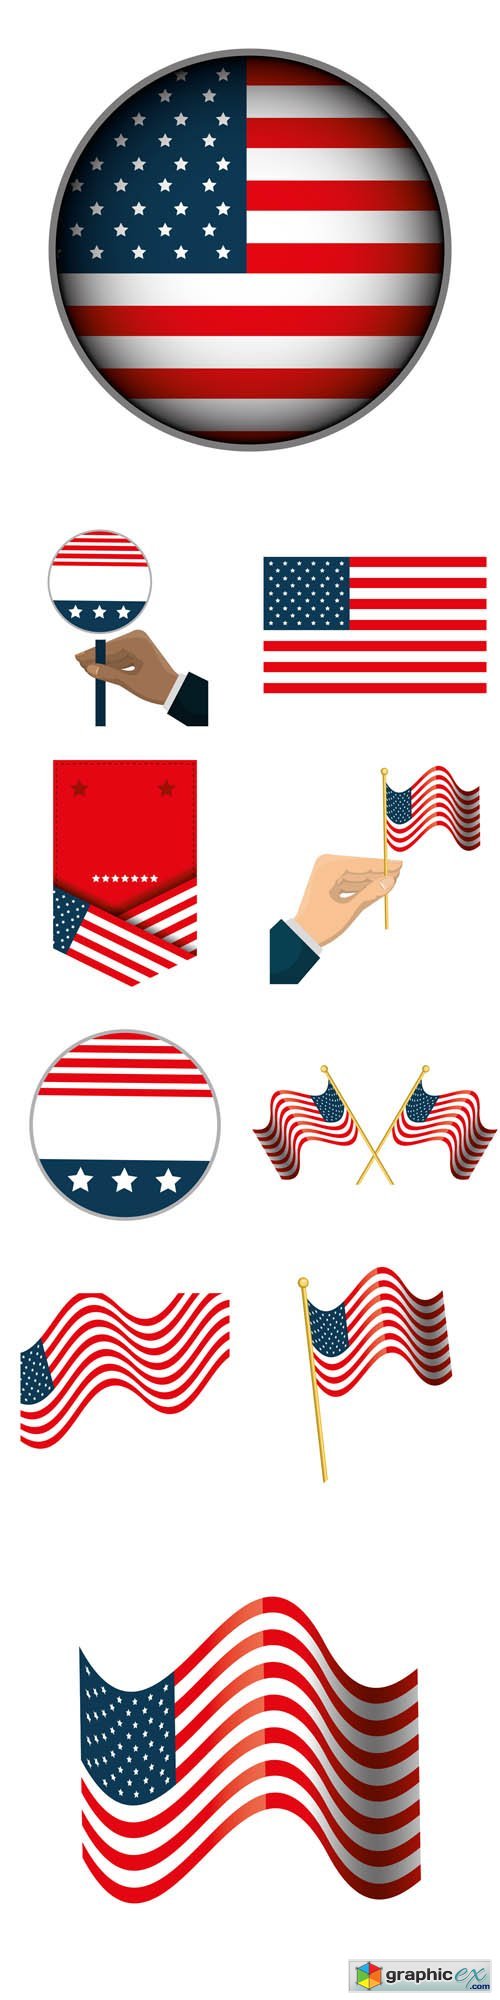 United States of America Emblems